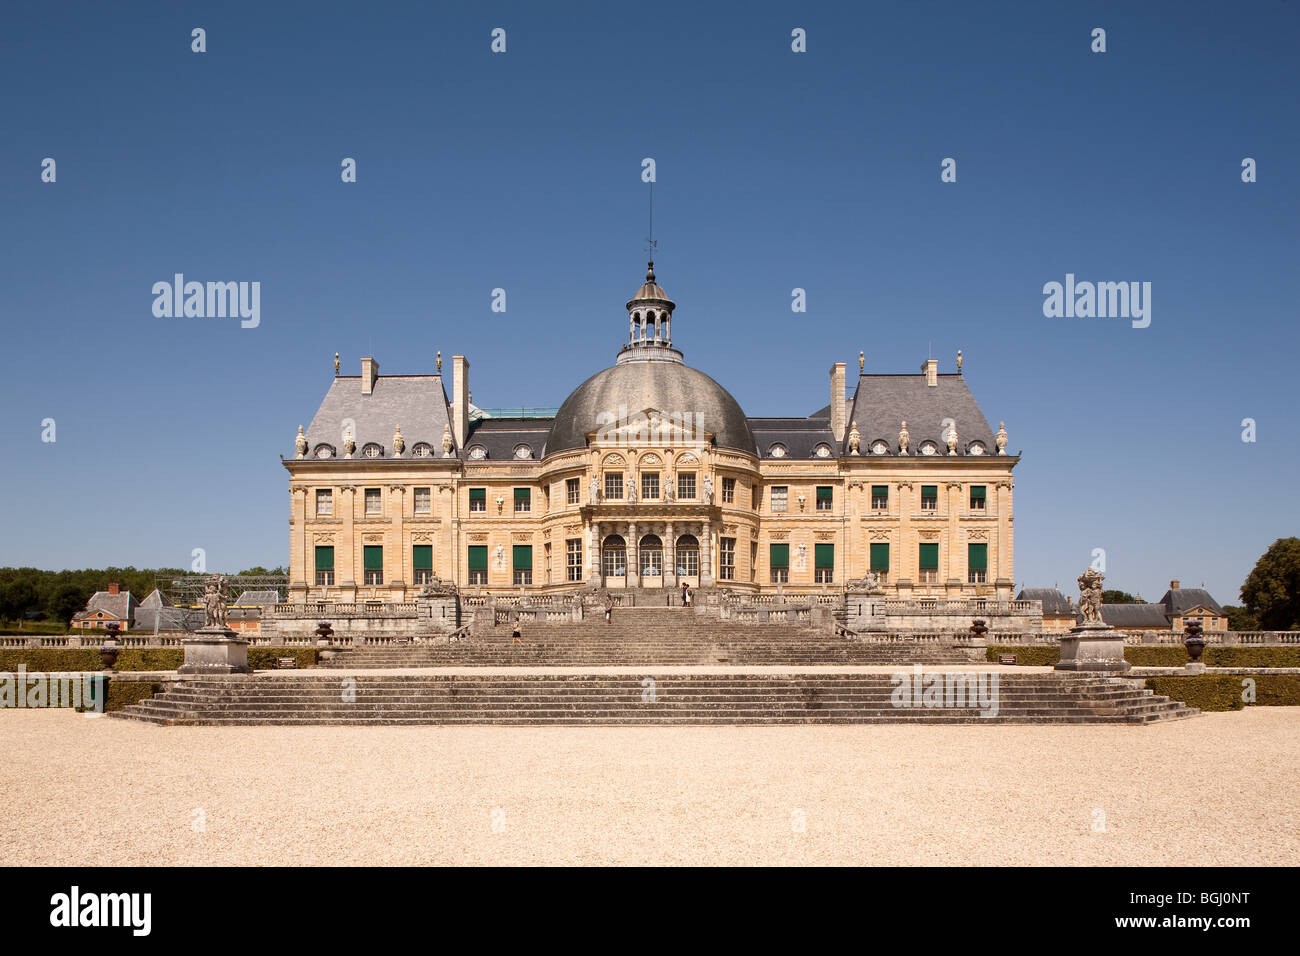 Château de Vaux-le-Vicomte, near Maincy, France. Stock Photo